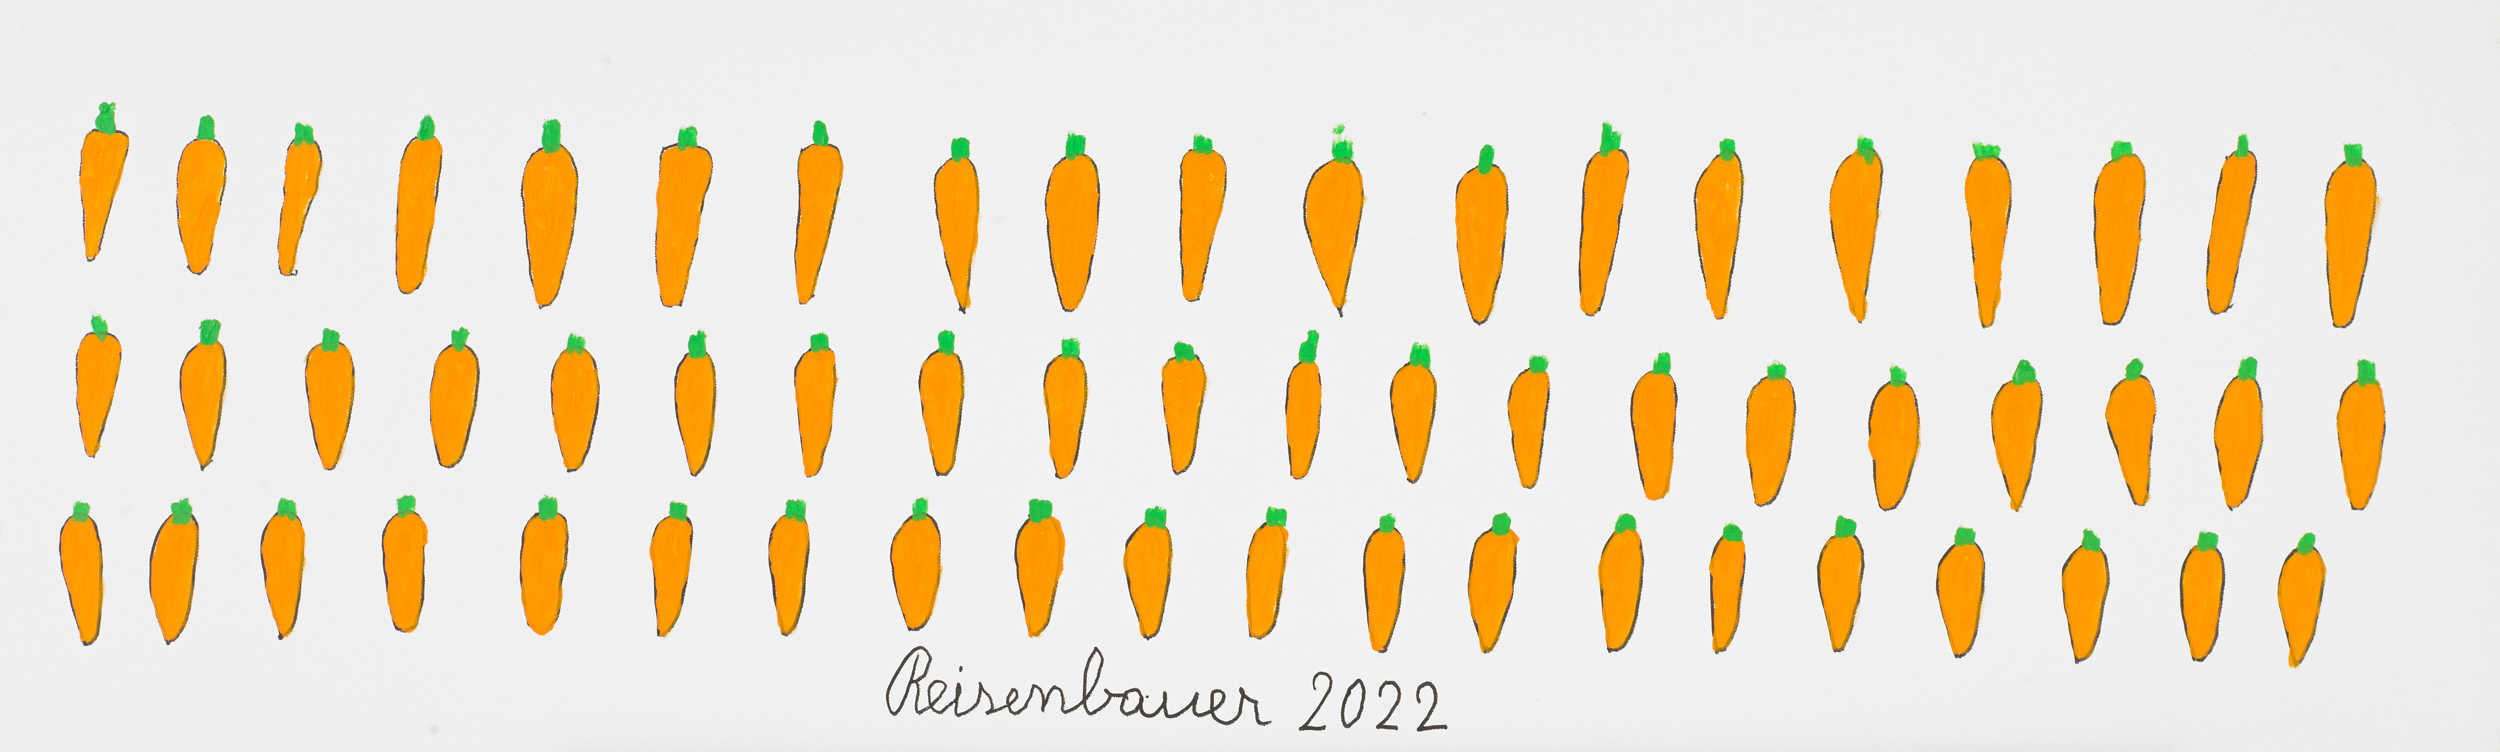 reisenbauer heinrich - Karotten / Carrots